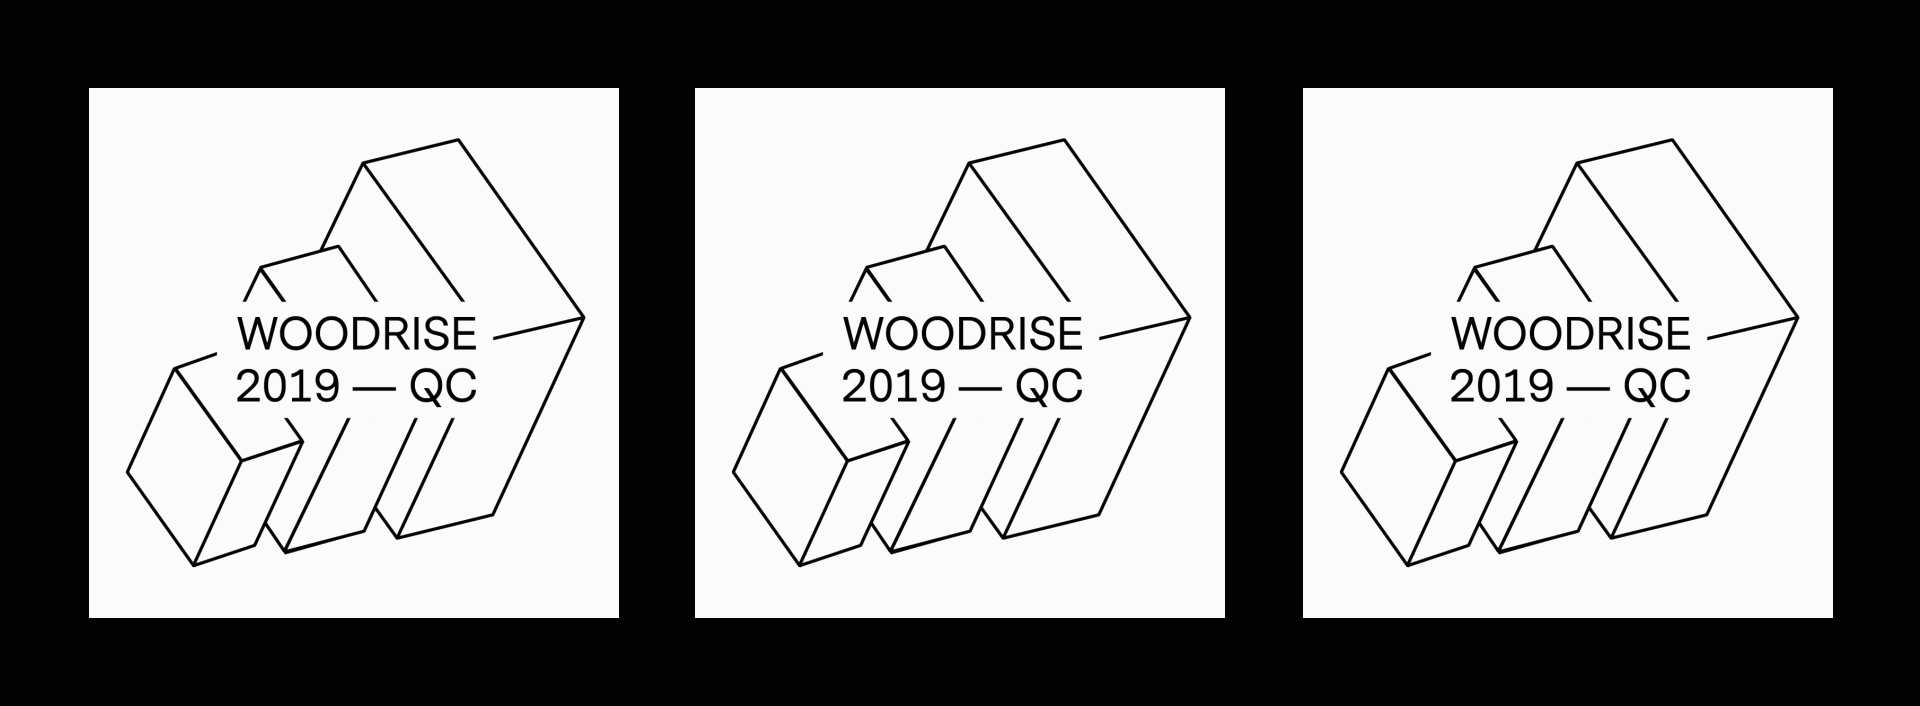 Woodrise on Behance00843f90445411.5e189ec8ca02e.gif